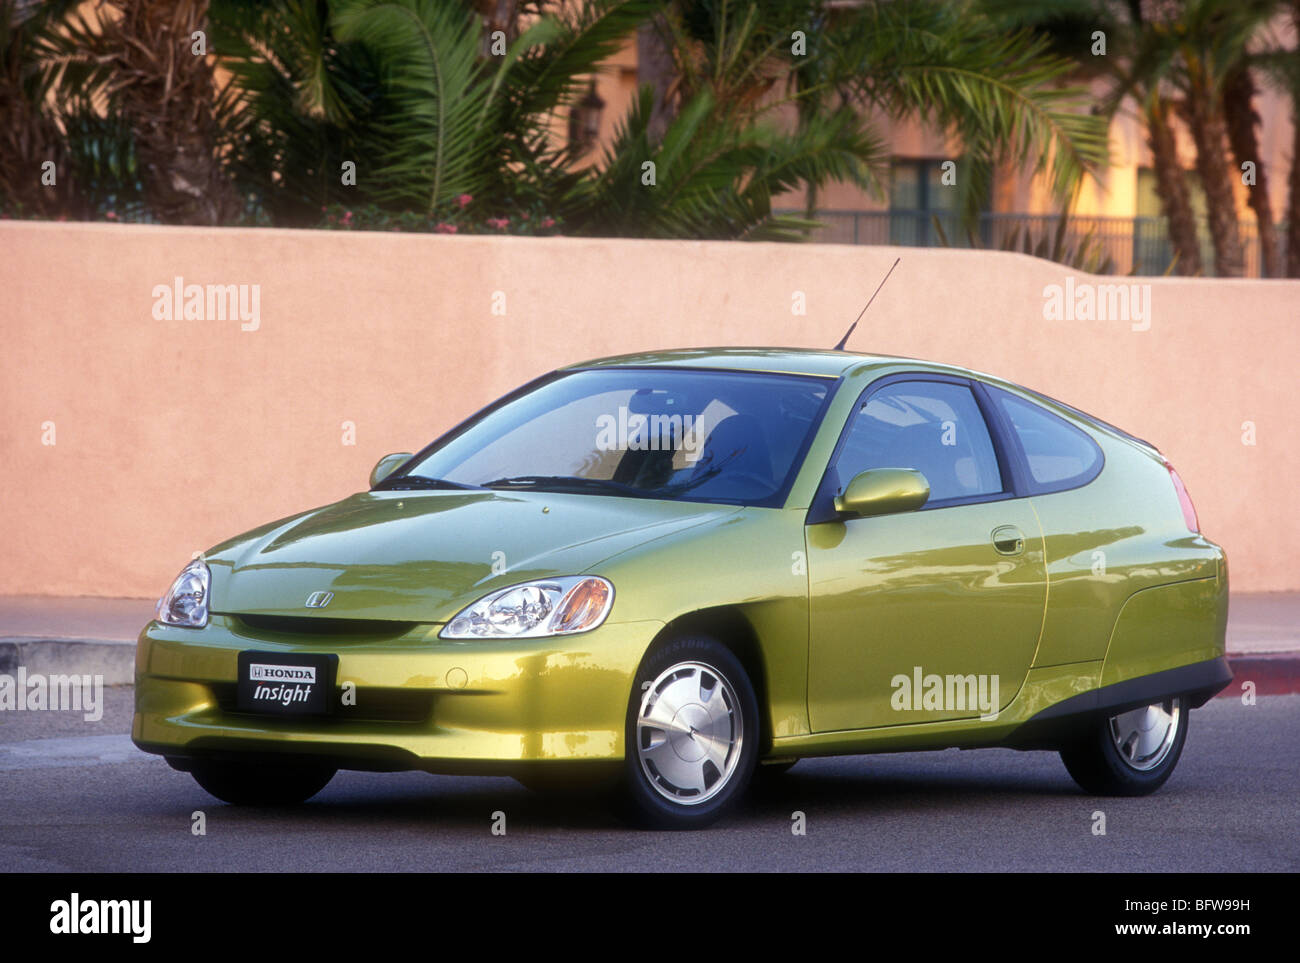 1999 Honda Insight in California. Stock Photo